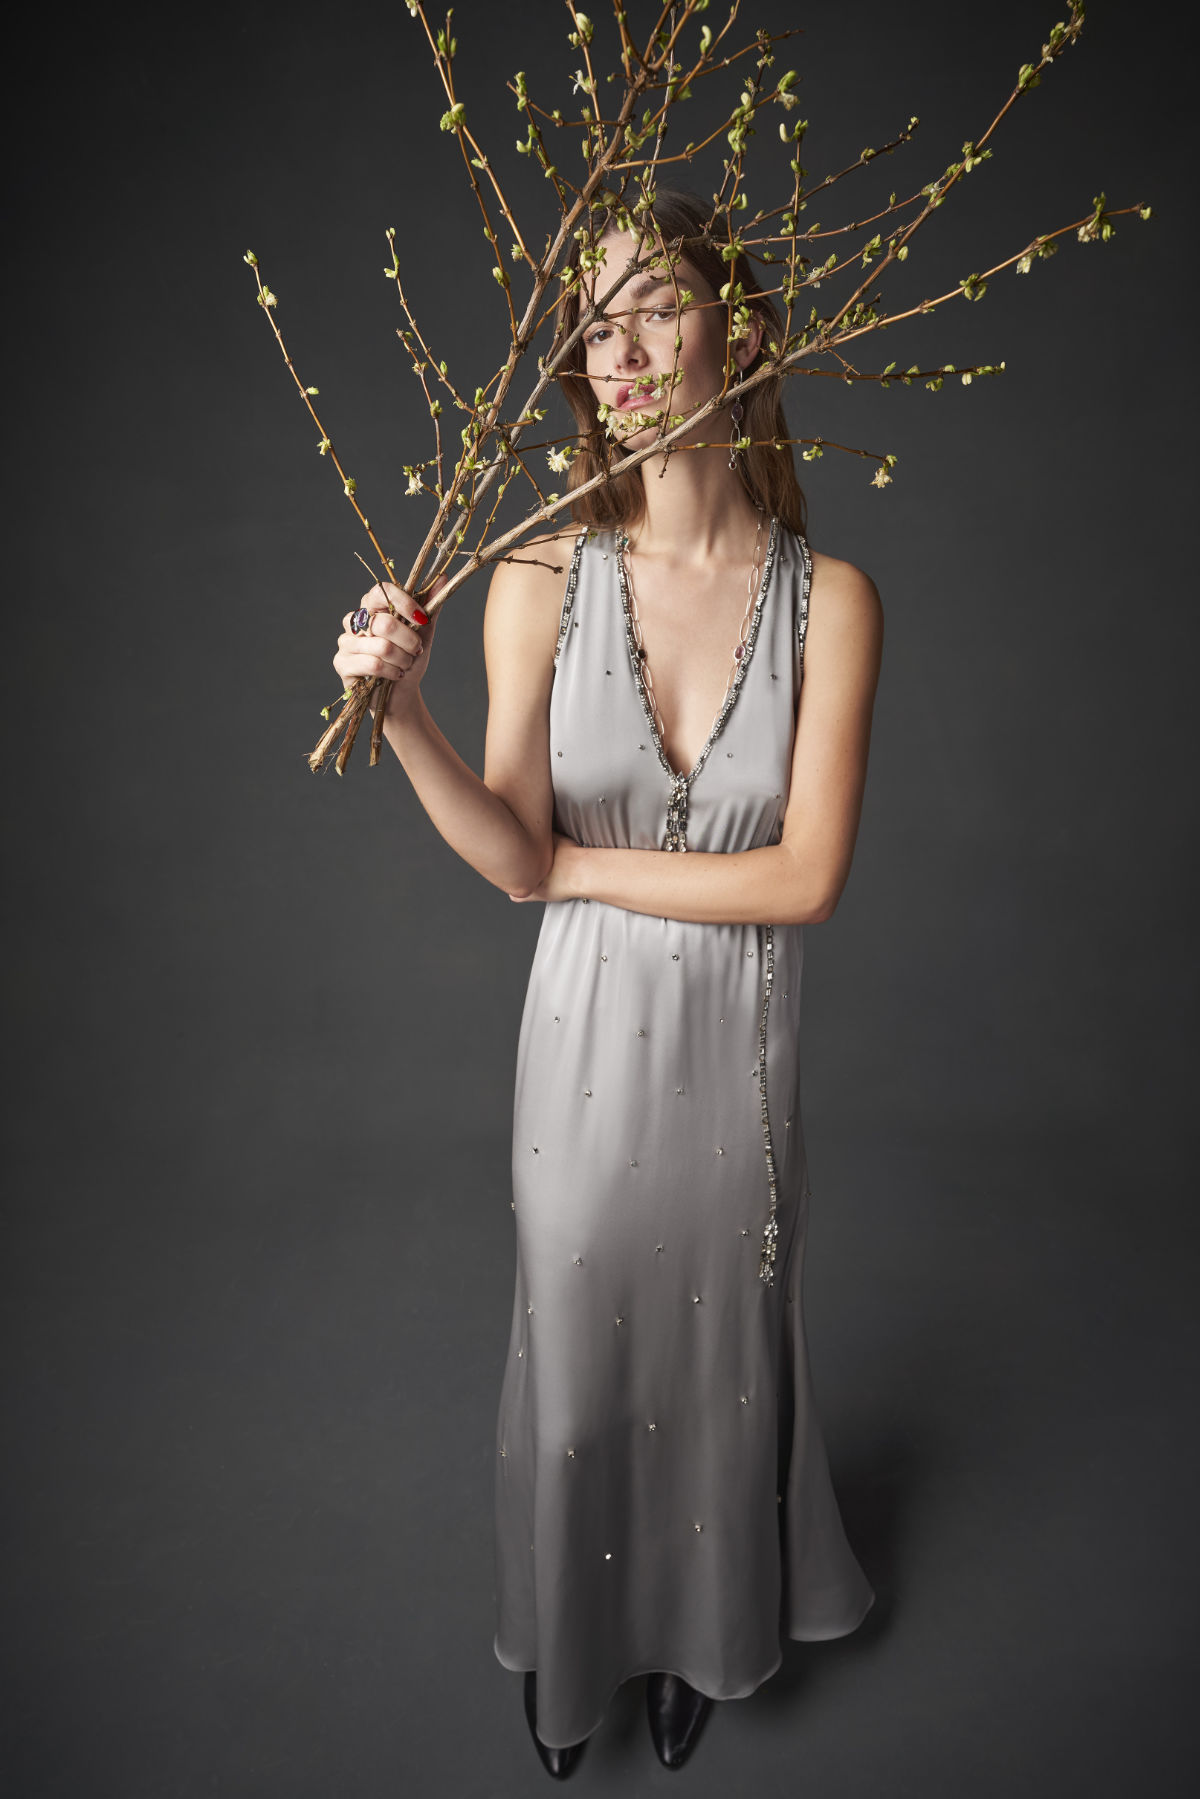 Julie De Libran Presents Its New Couture 2022 Collection